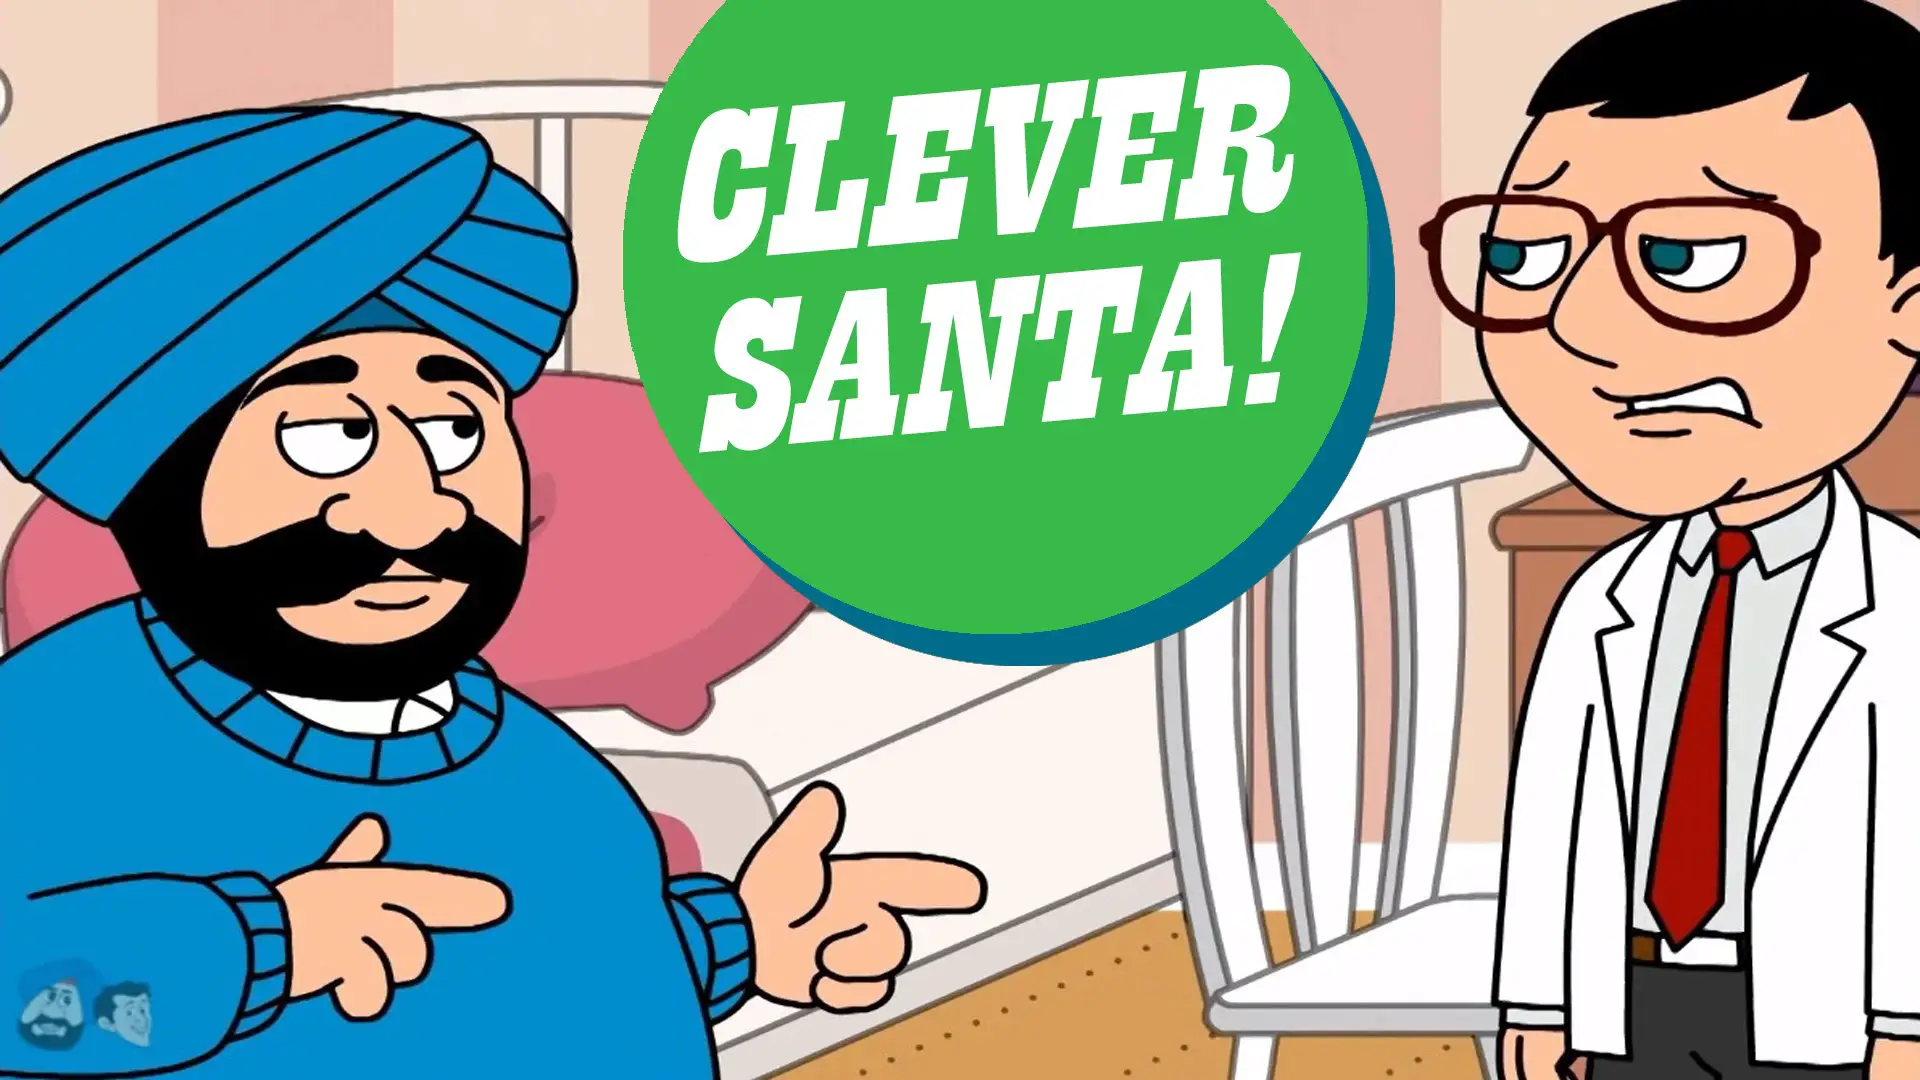 Clever Santa!, Santa Banta Jokes, Amazing Funny Videos 2015. youtube.com. h...